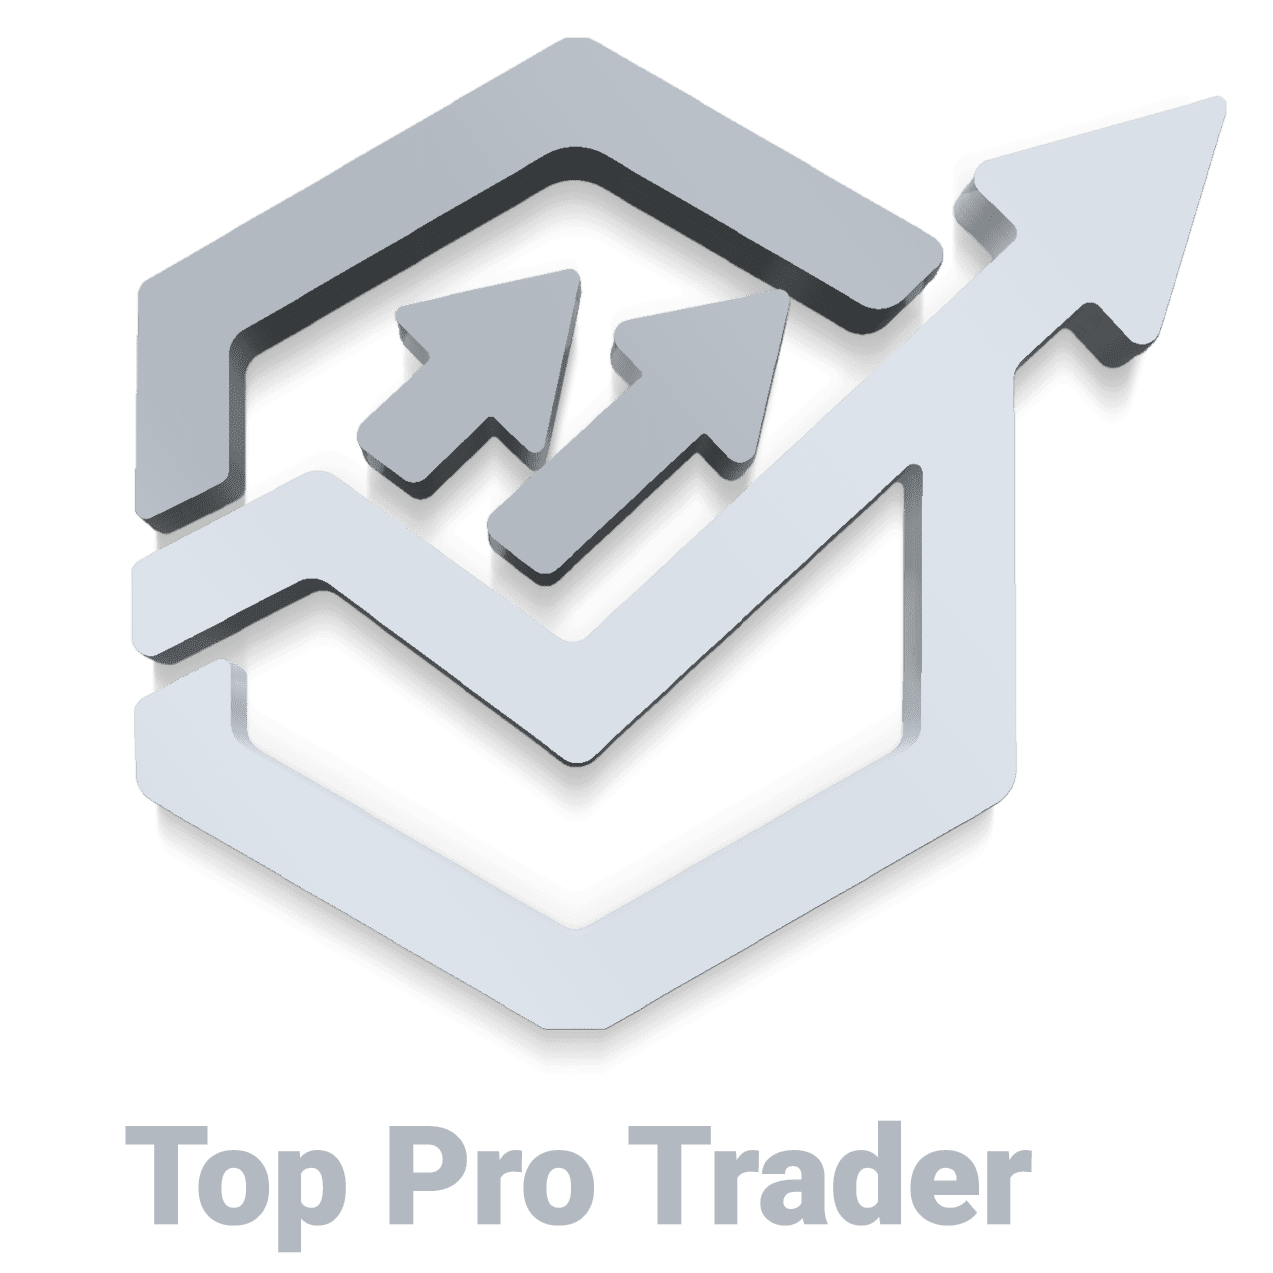 Top Pro Trader